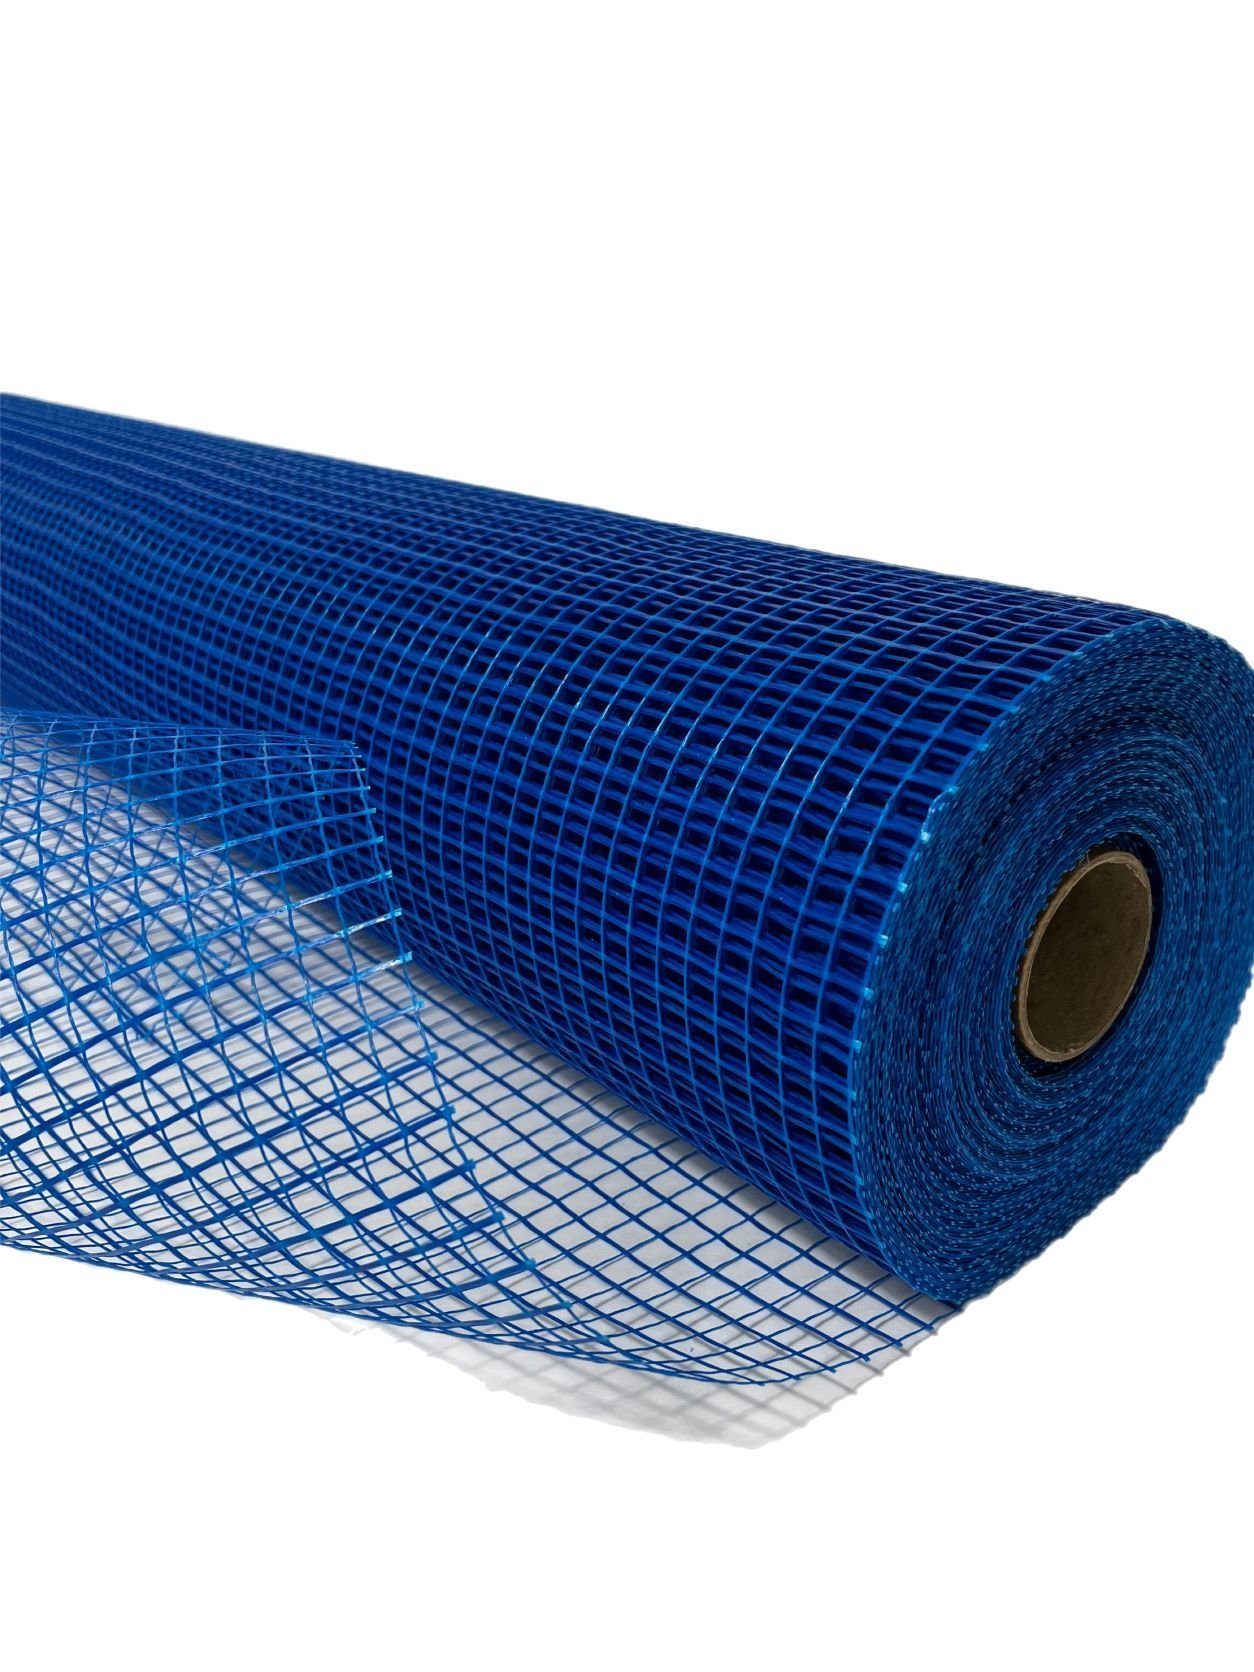 VaGo-Tools Glaswolle Putzgewebe Glasfasergewebe 1000m² 110g/m² Blau